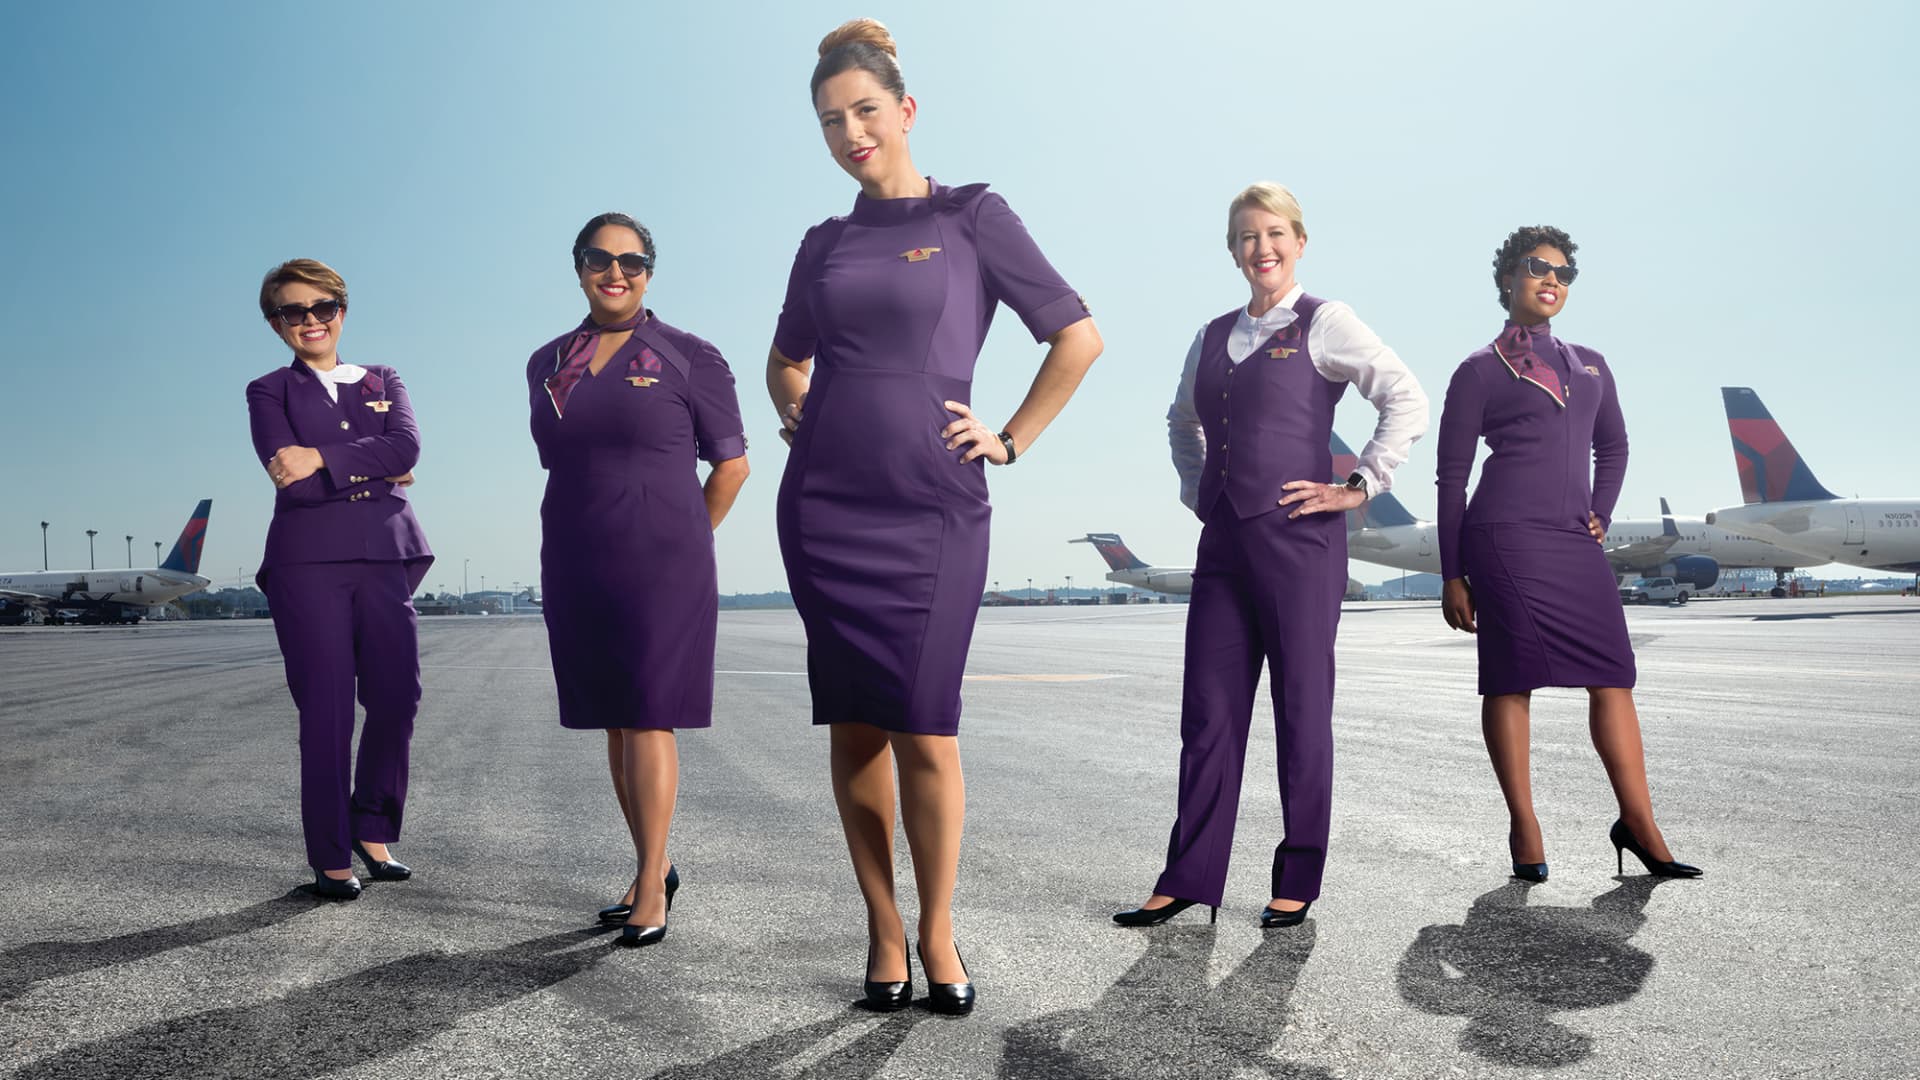 Delta Air Lines' new Zac Posen uniforms will go with shorter heels